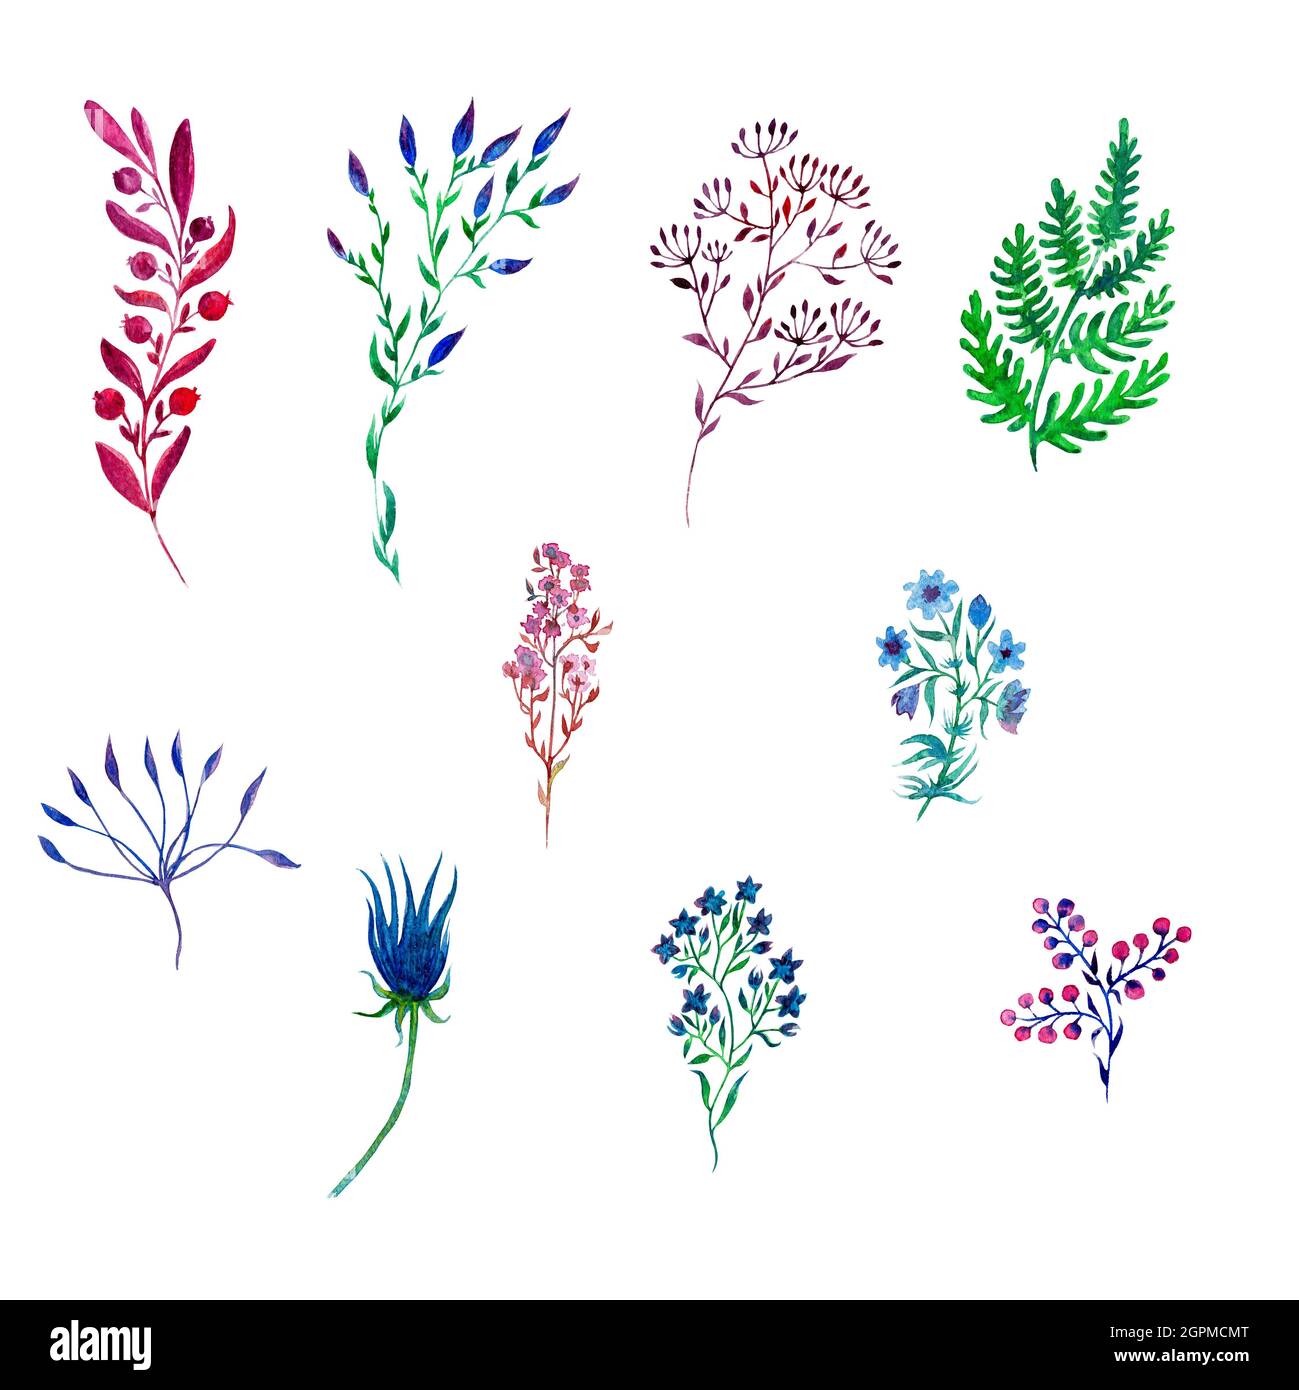 compositions florales aquarelles, brindilles, lames d'herbe. Illustration botanique Banque D'Images